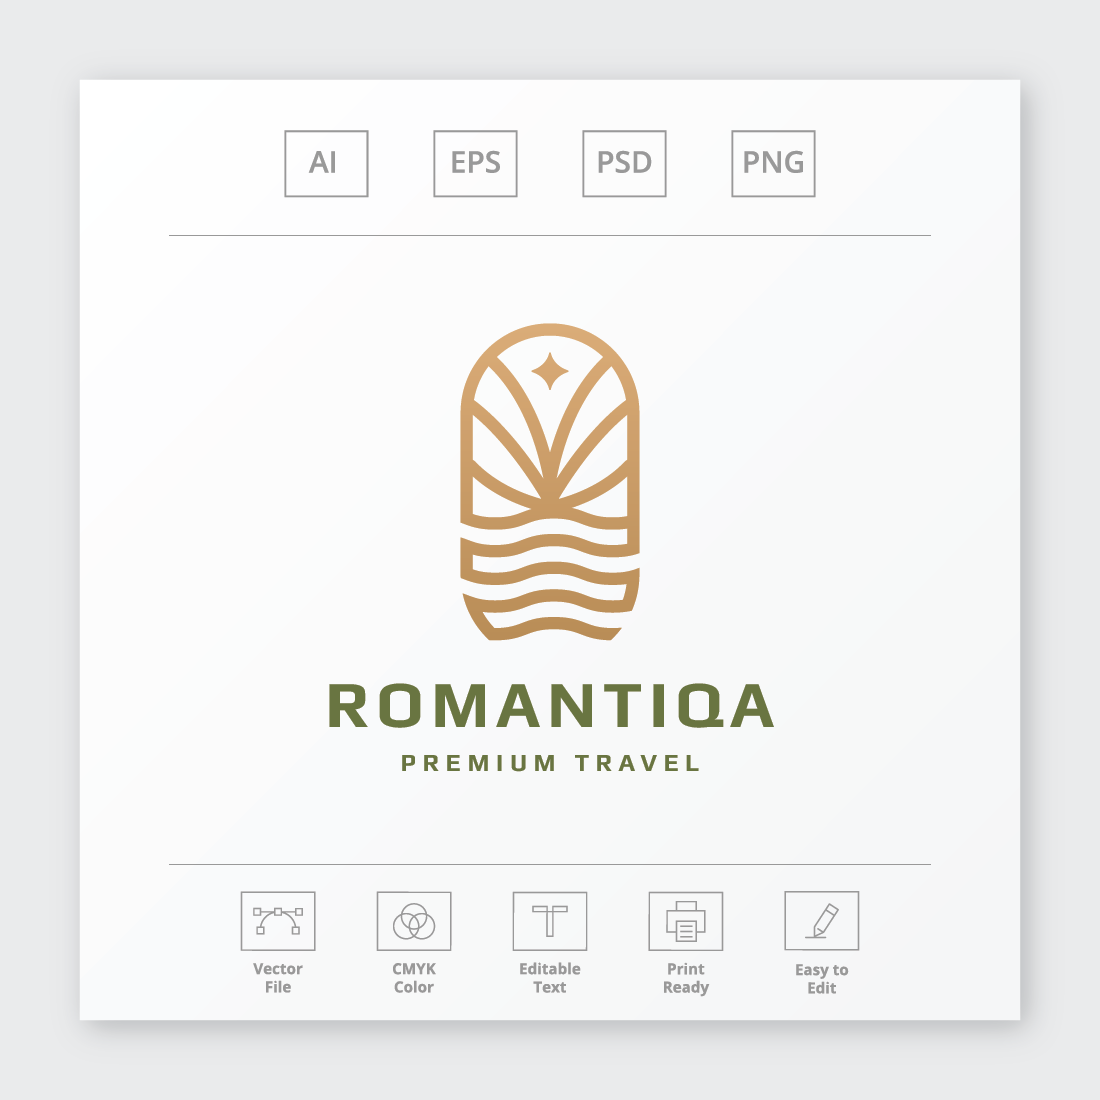 Romantic Travel Trip Logo cover image.